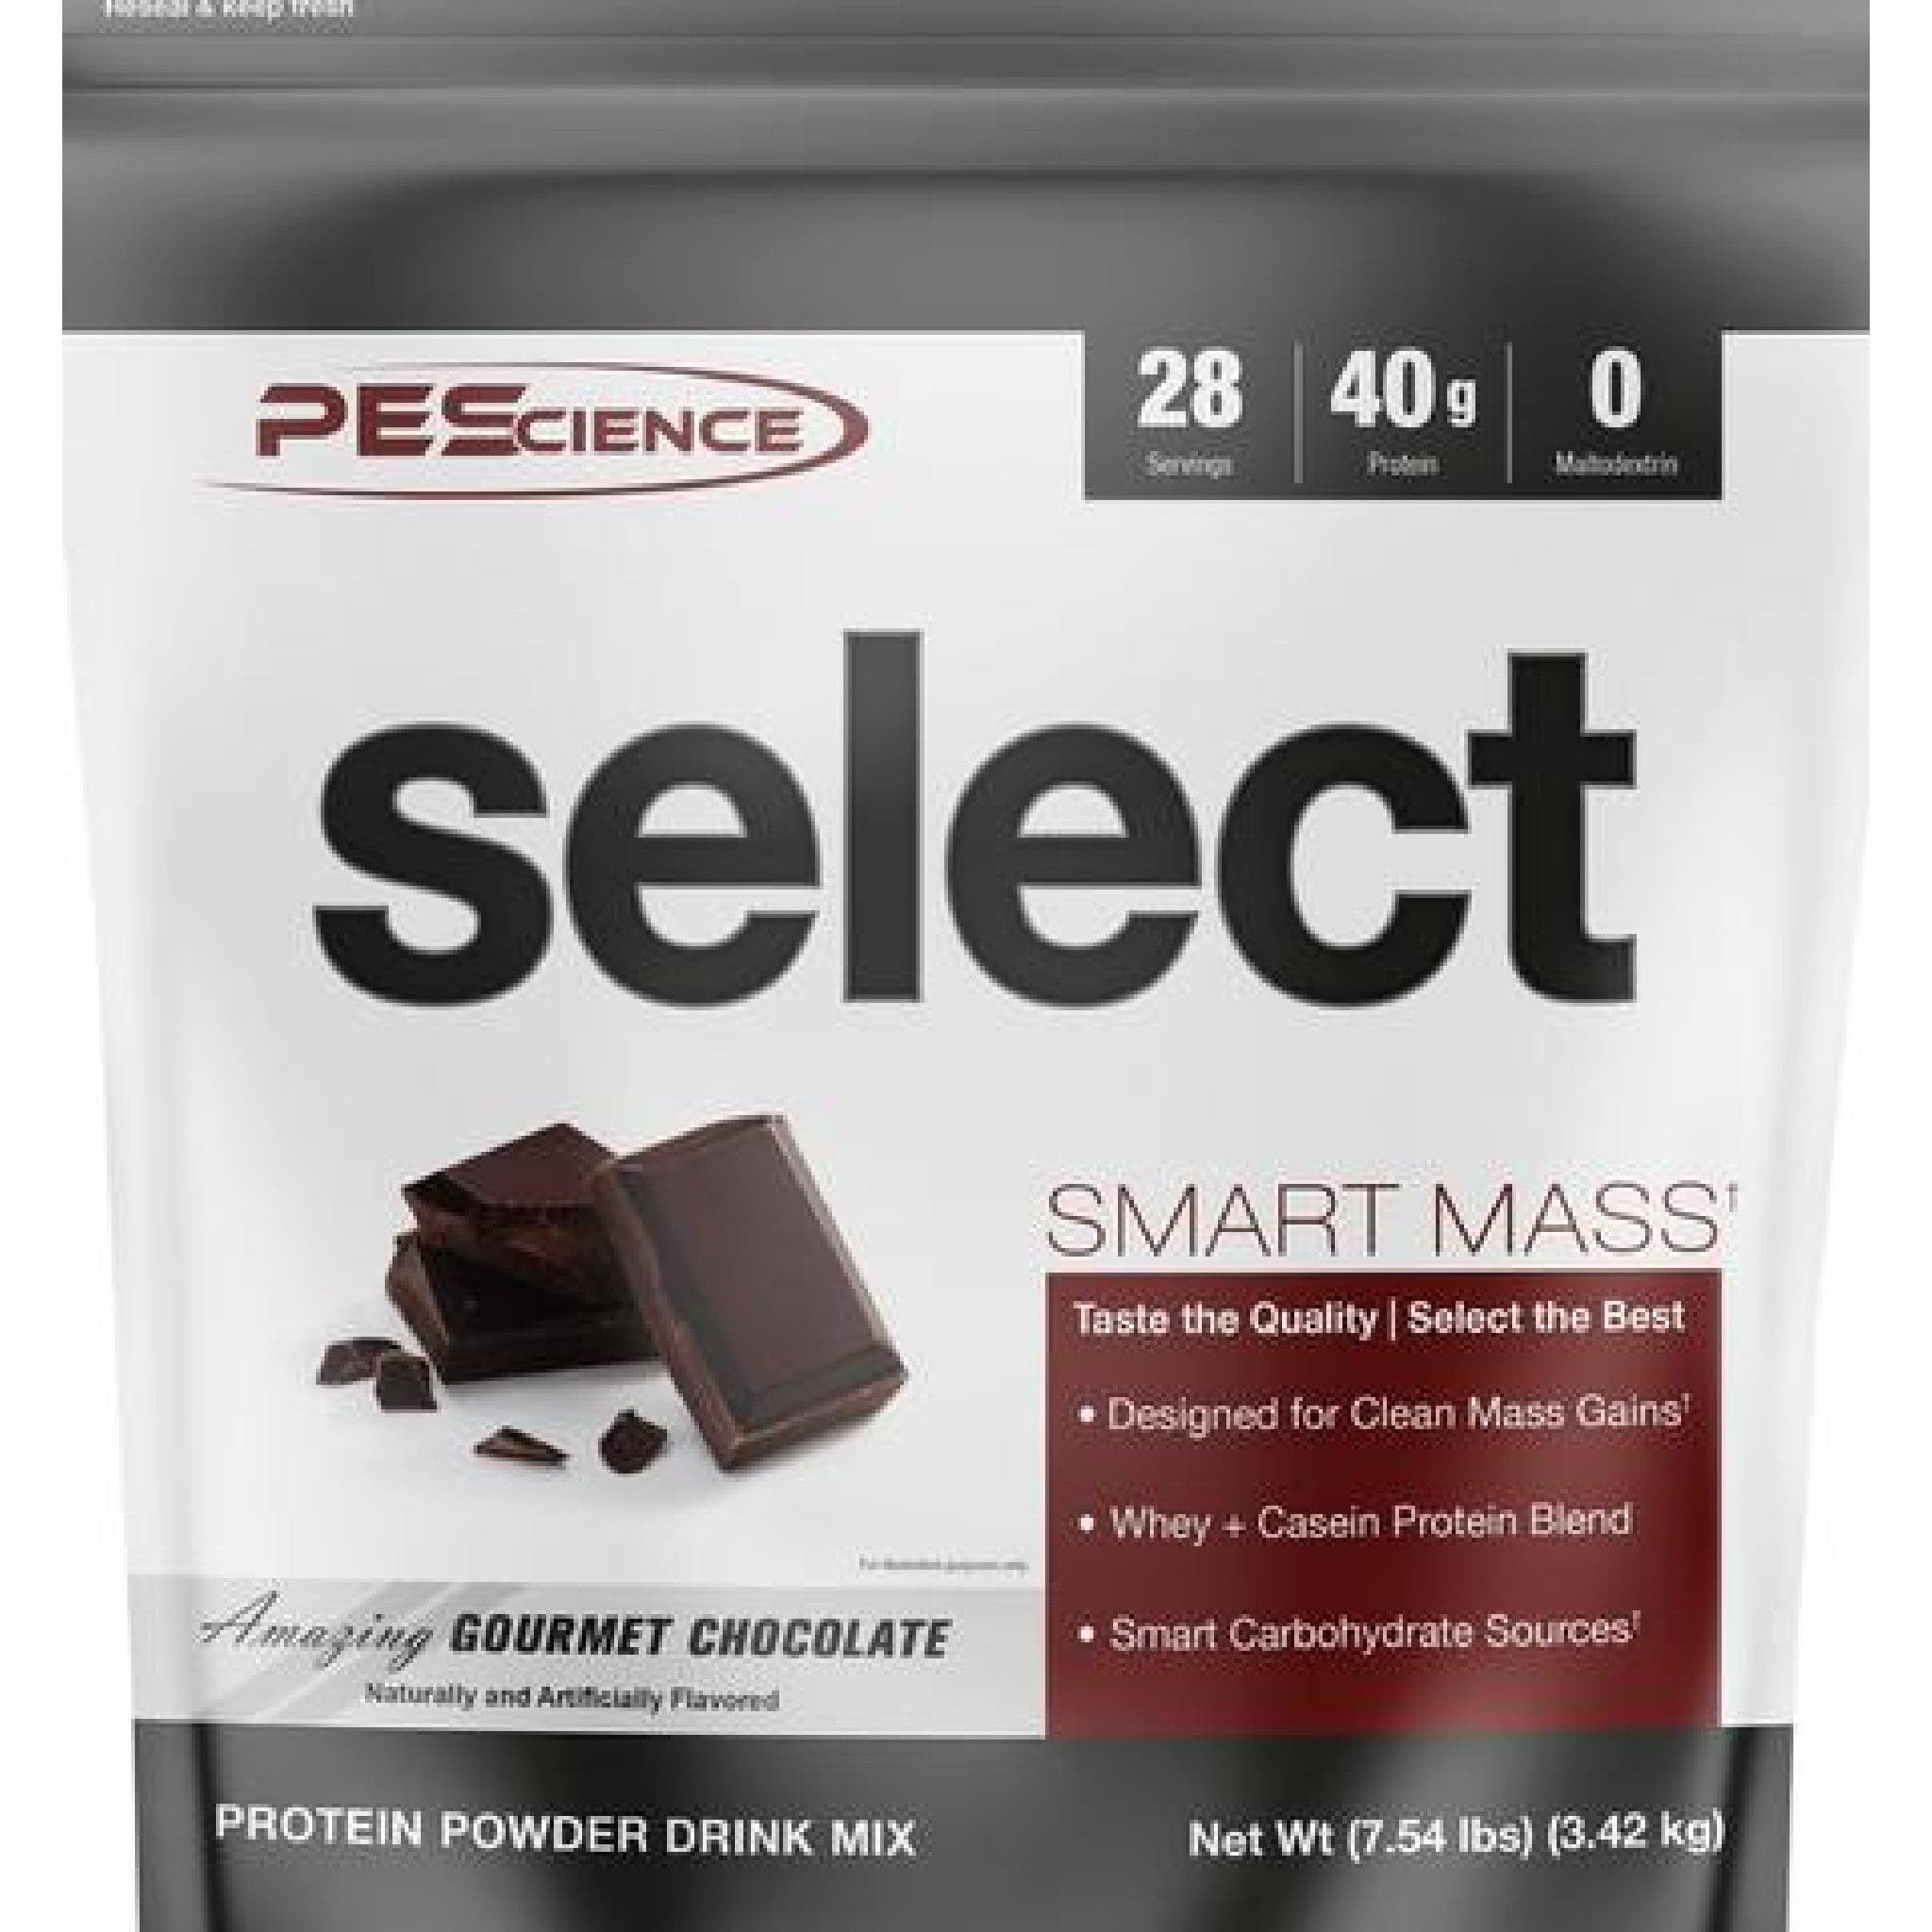 PEScience Select Smart Mass 28 portions